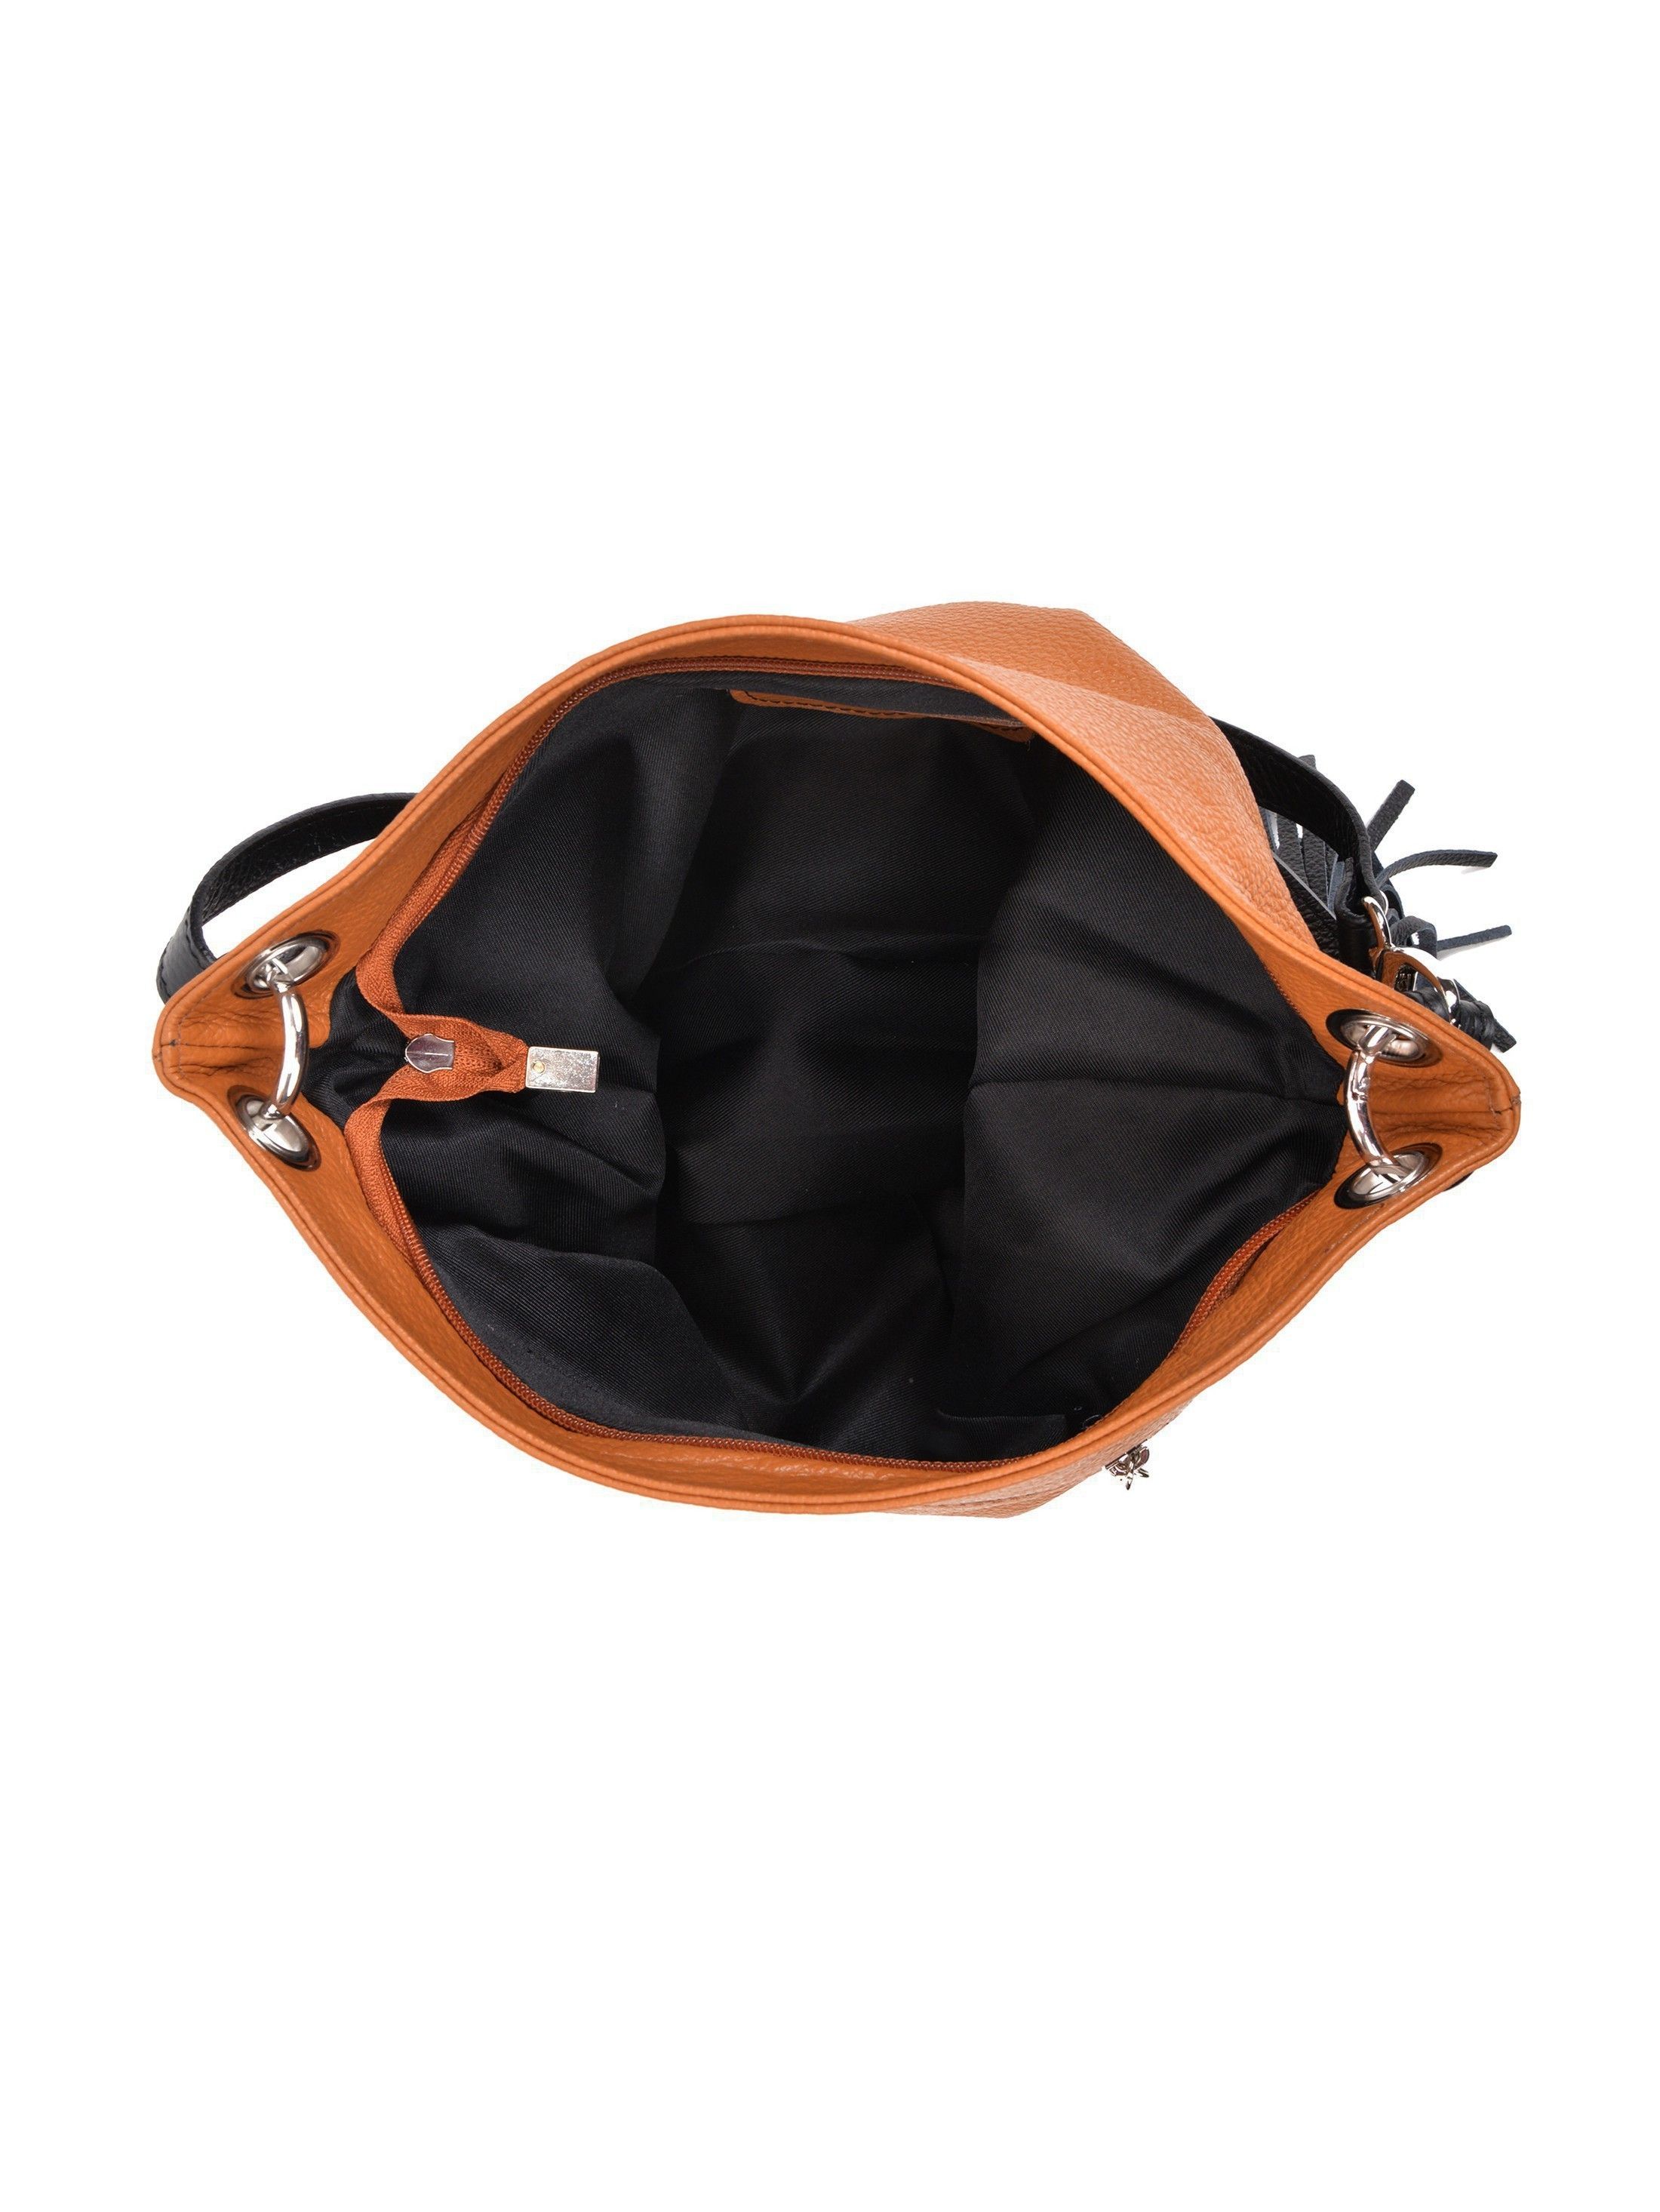 Shoulder Bag
100% cow leather
Single adjustable top handle 55 cm
Top zip closure
Back zip pocket
Tassel accent
Dimensions (M): 28.5x35x12.5 cm